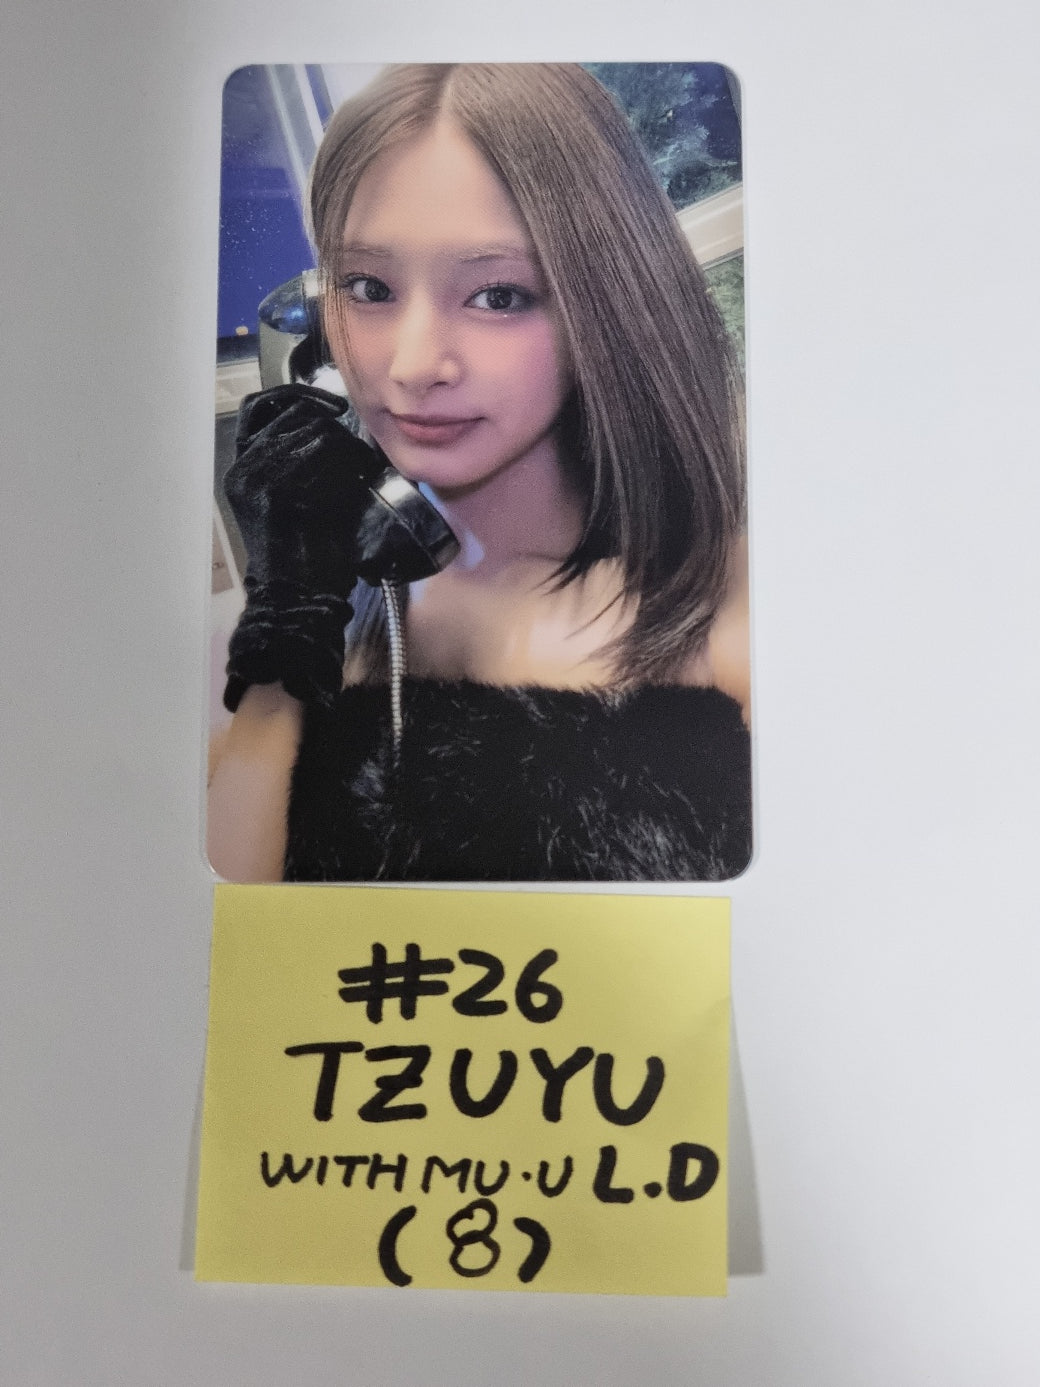 Twice "READY TO BE" - Withmuu Lucky Draw Event PVC Photocard, Polaroid Type Photocard